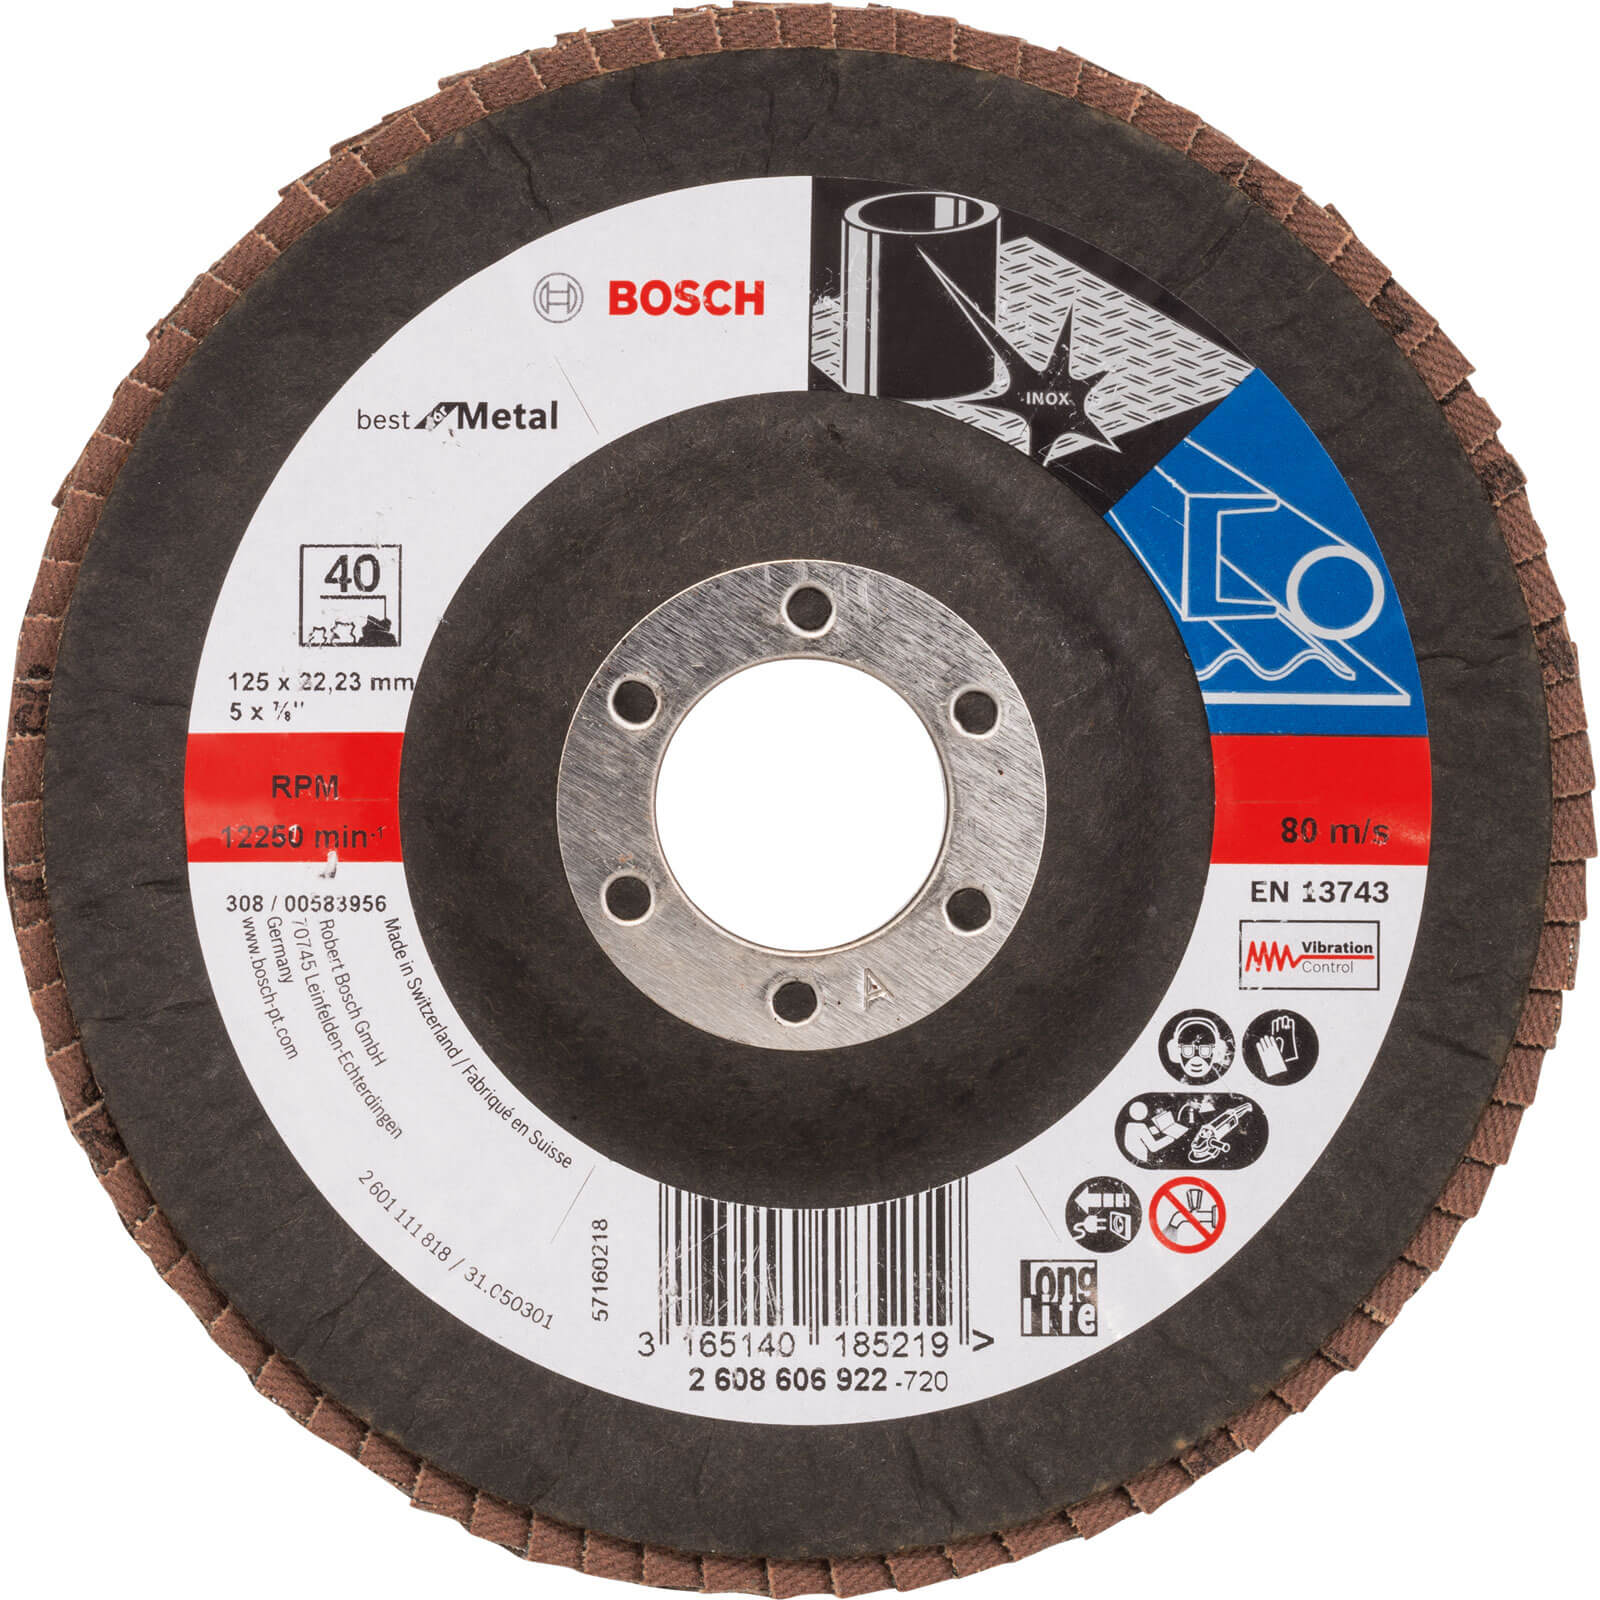 Image of Bosch Zirconium Abrasive Flap Disc 125mm 40g